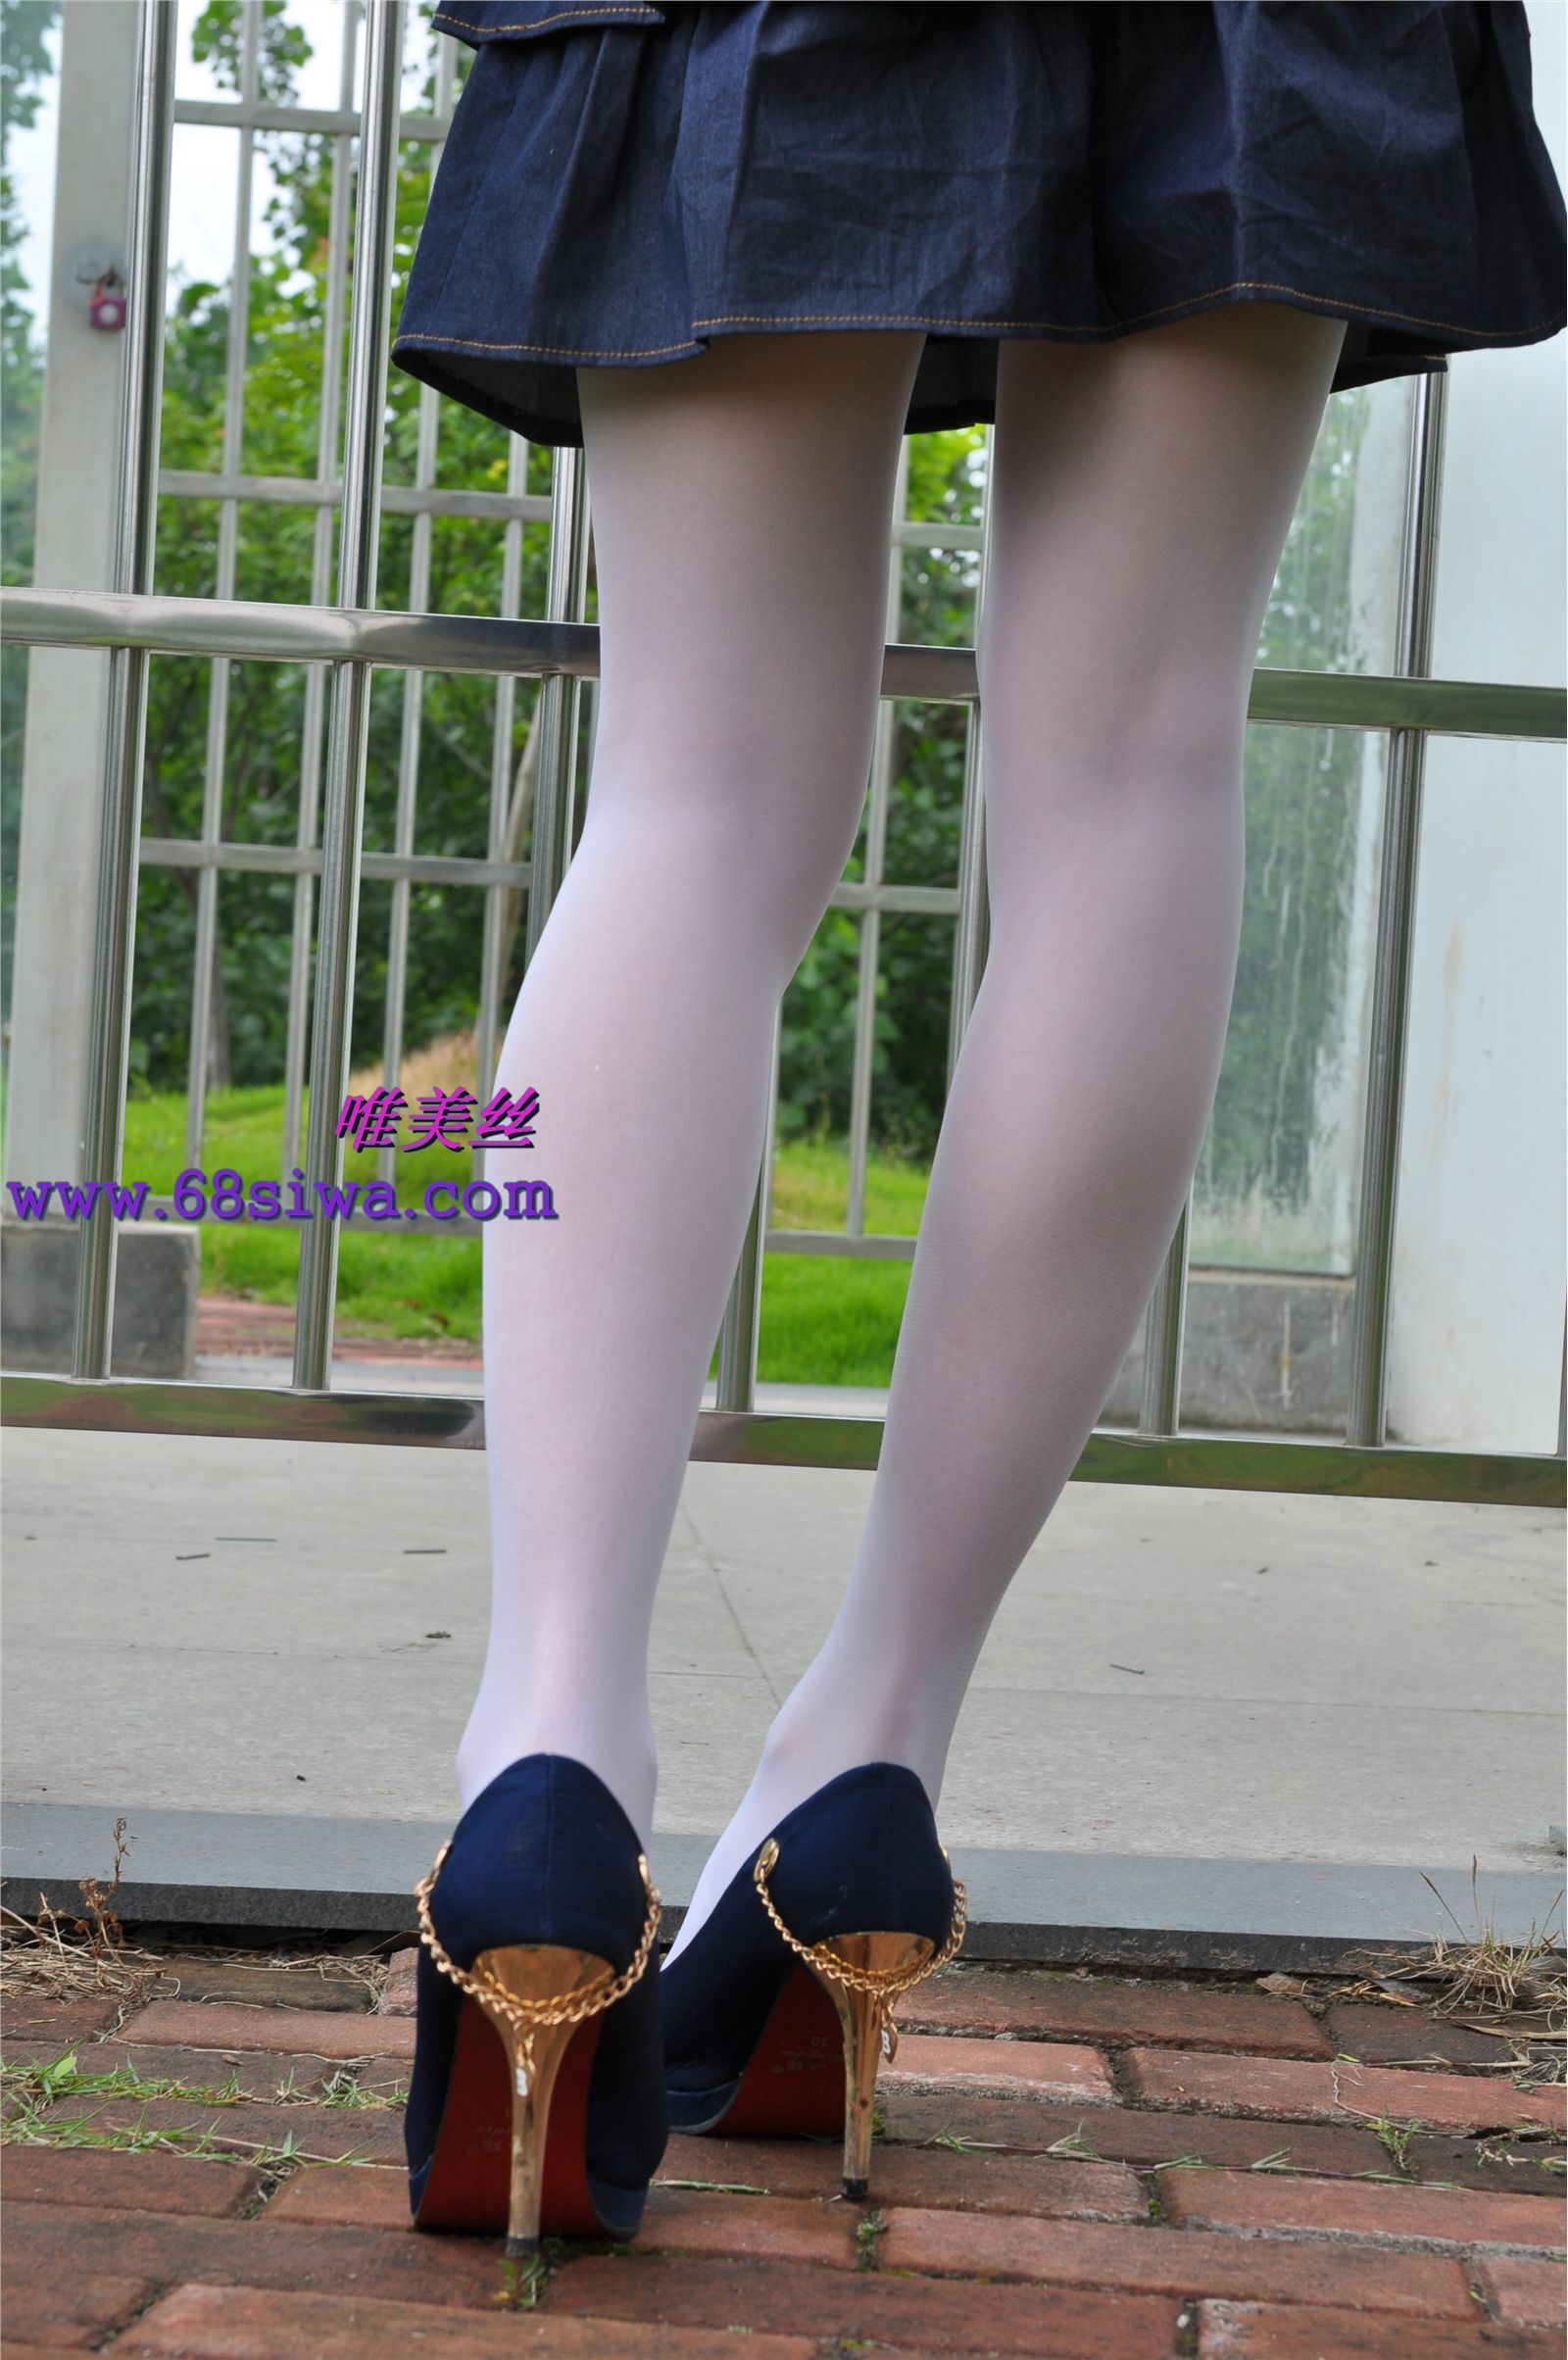 Meimei silk 11008 quietly domestic original silk stockings foot set